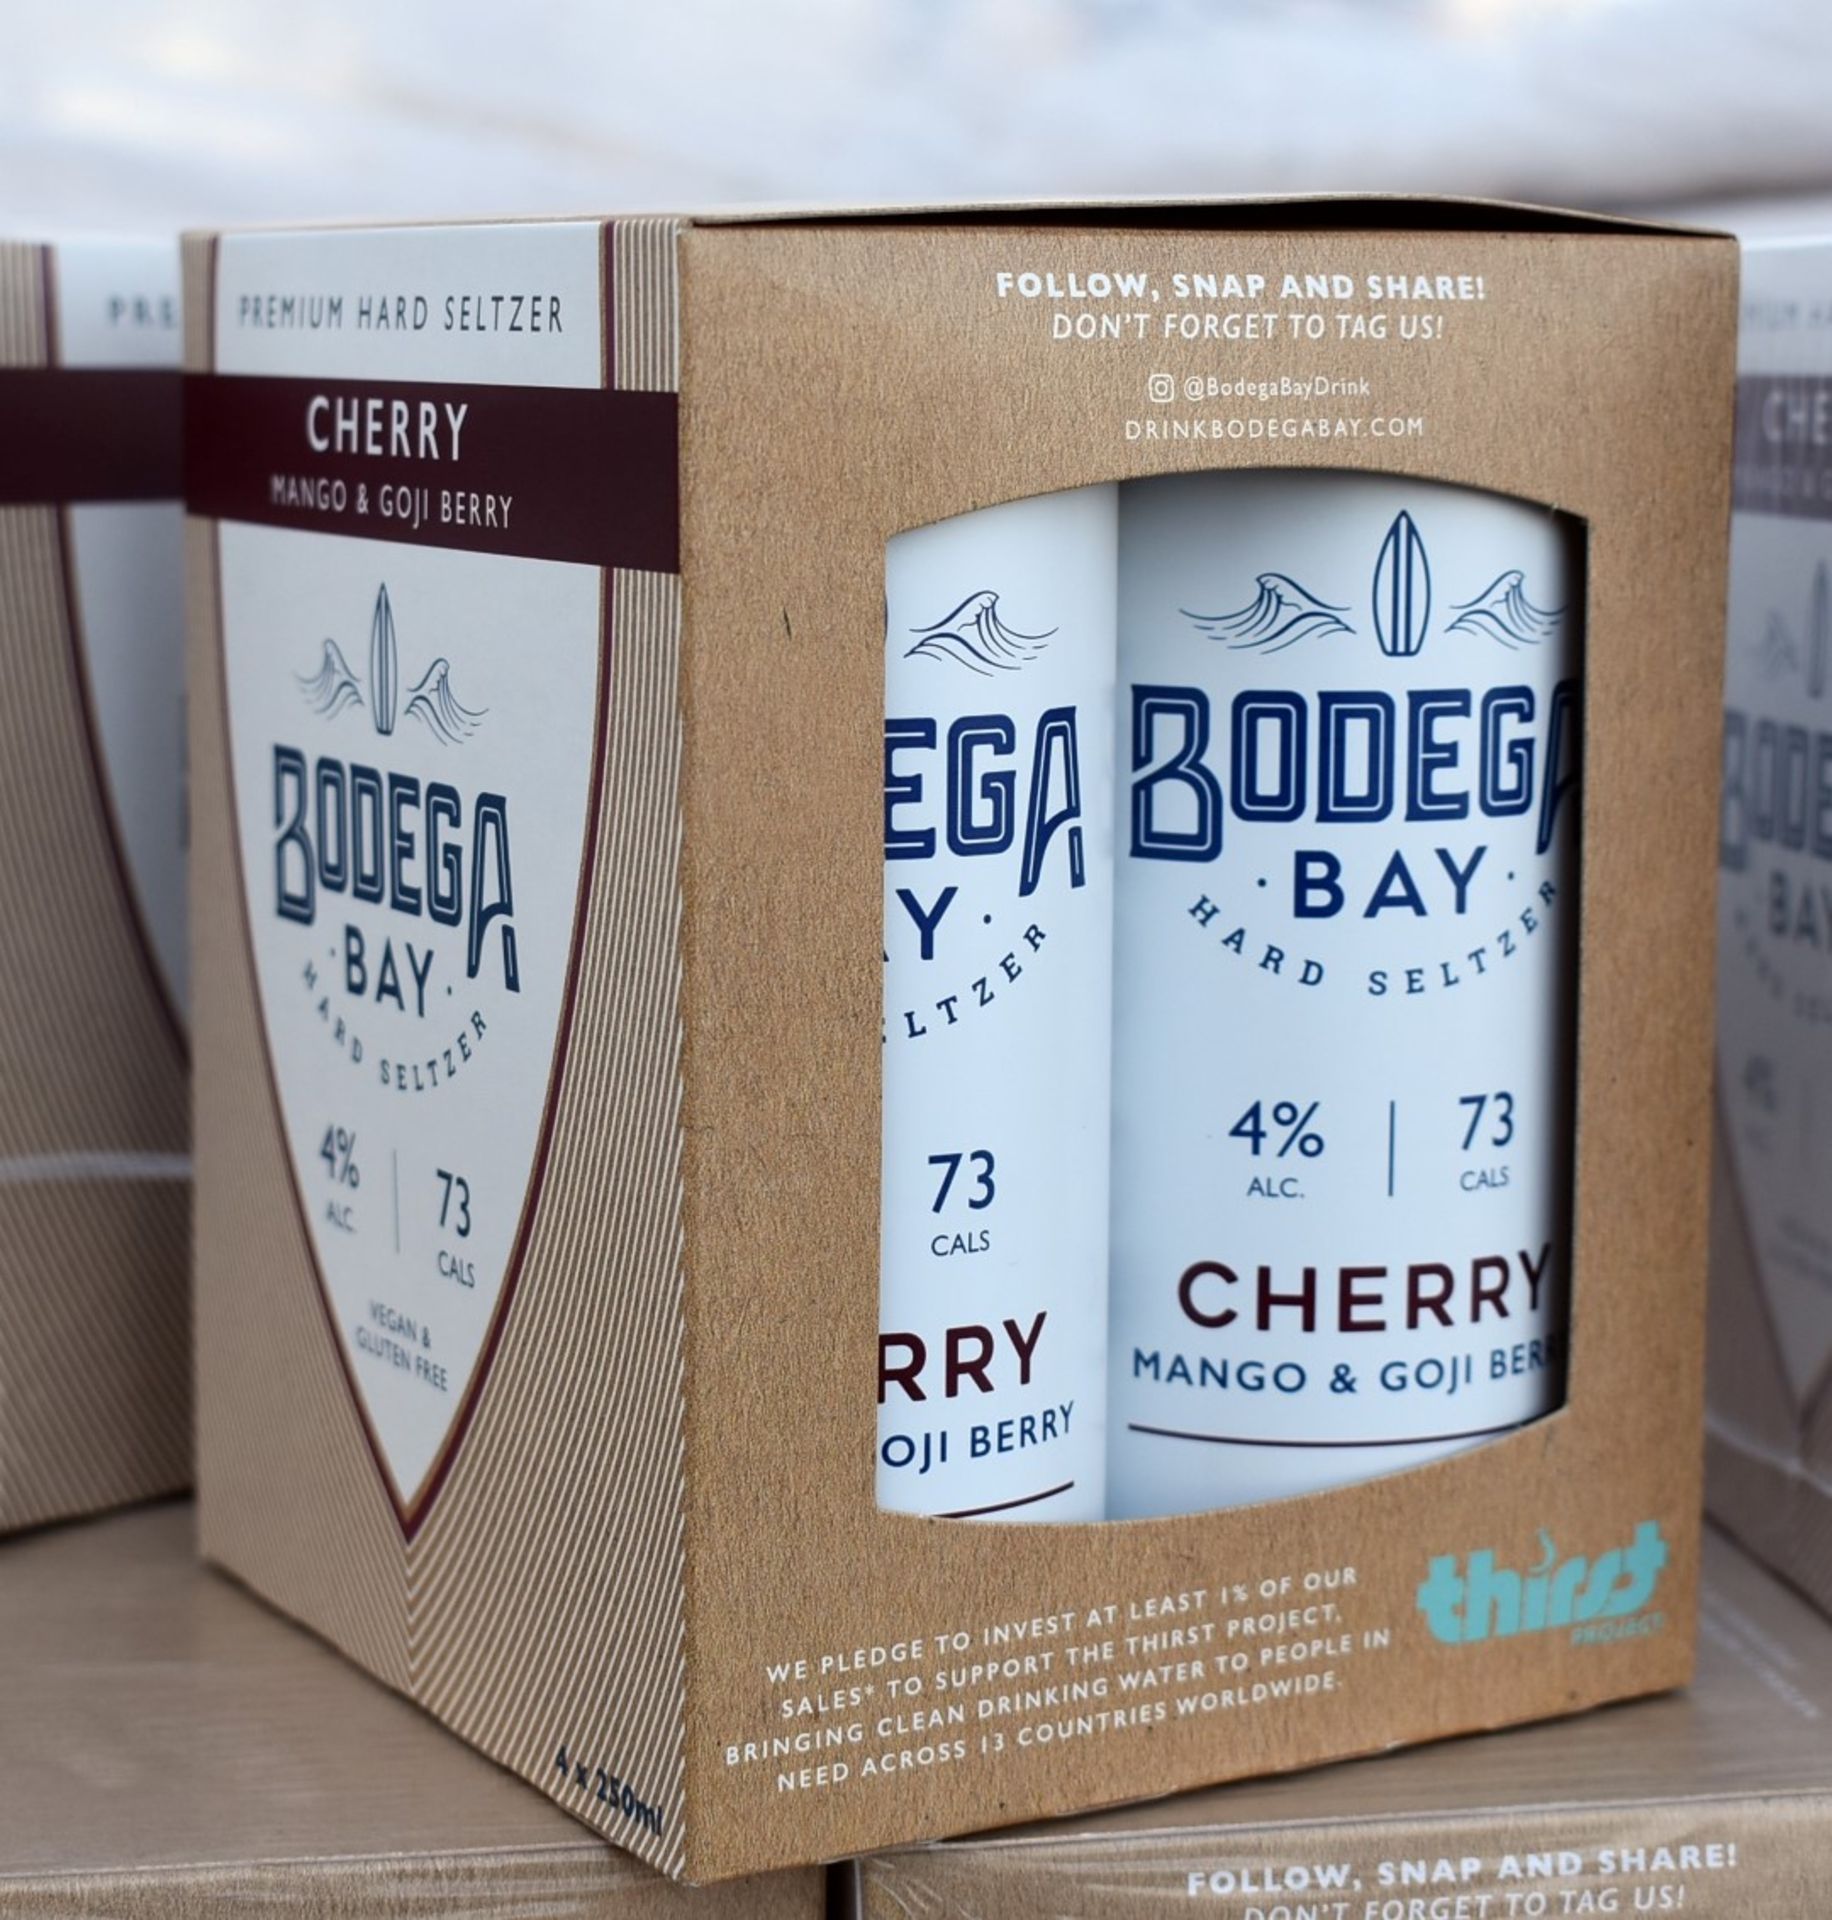 24 x Bodega Bay Hard Seltzer 250ml Alcoholic Sparkling Water Drinks - Cherry Mango & Goji Berry - Image 7 of 7